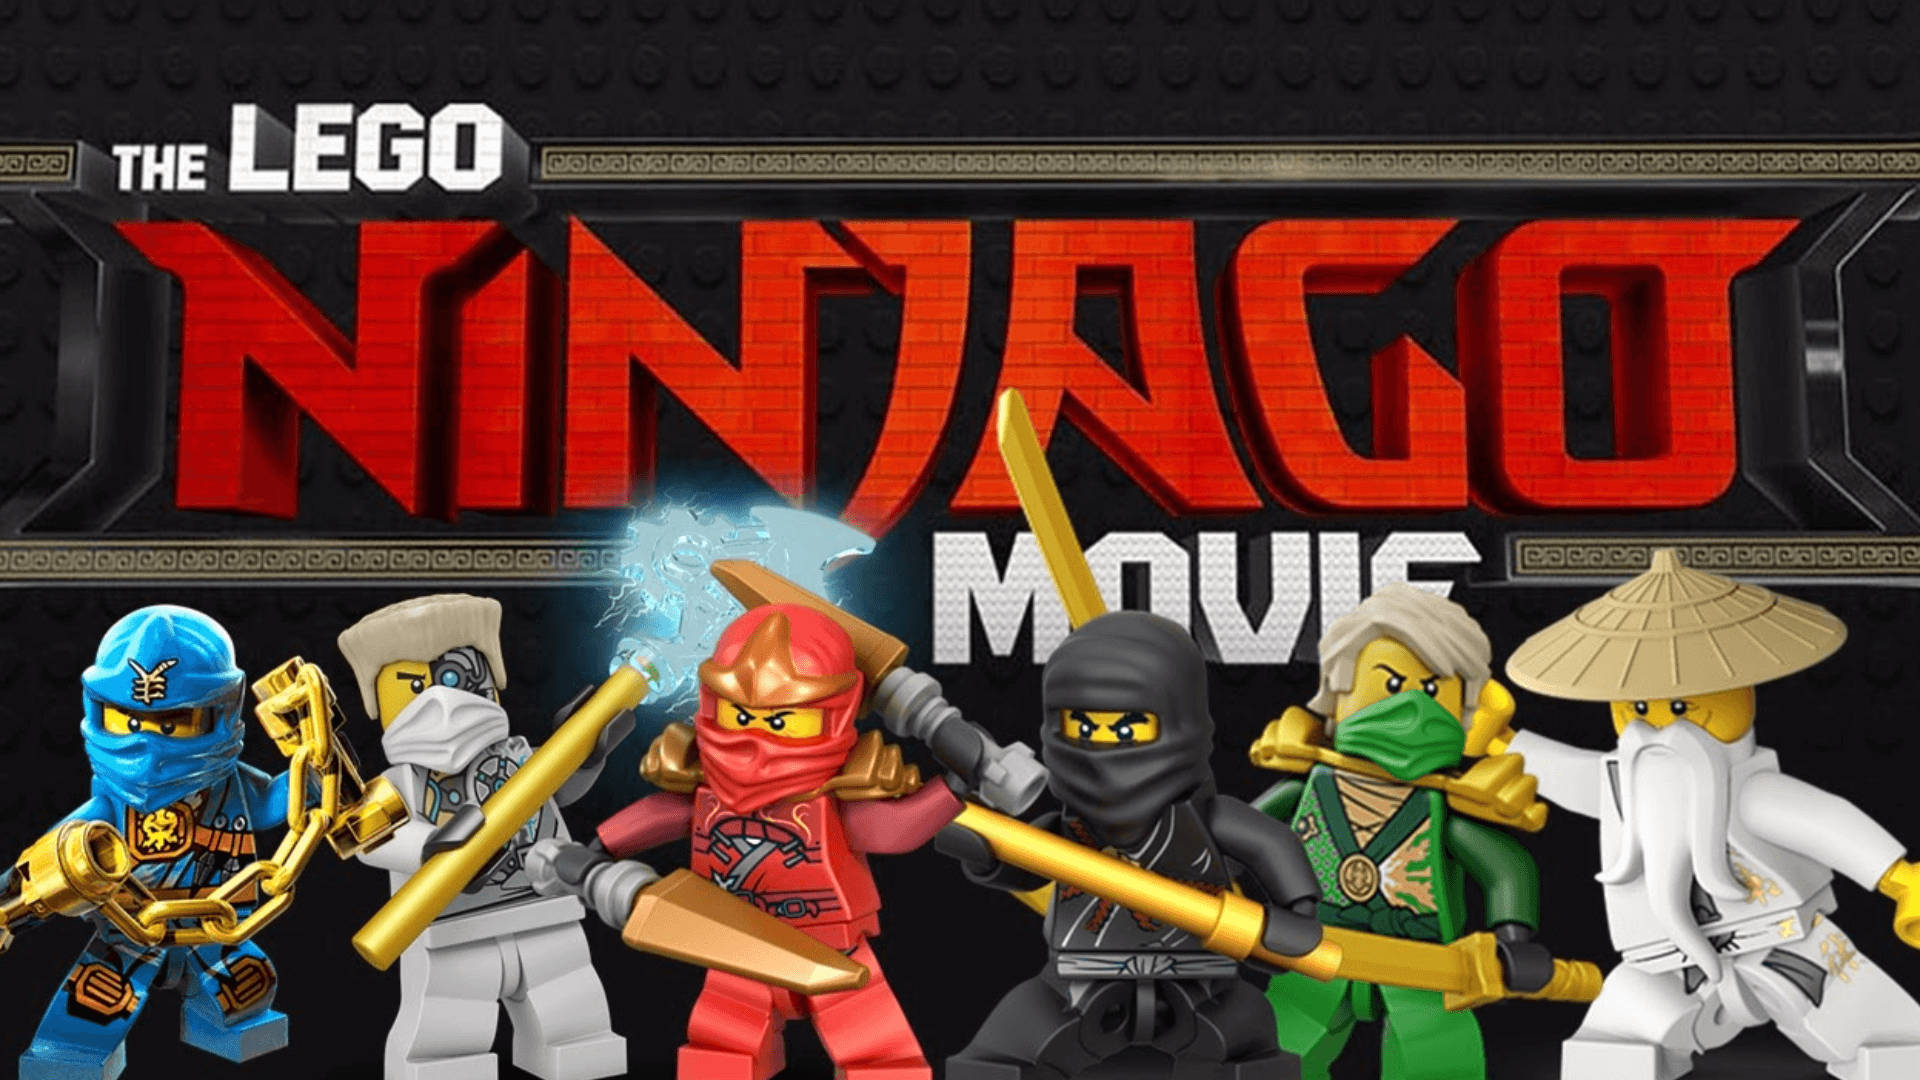 Lego Ninjago Movie Poster Background